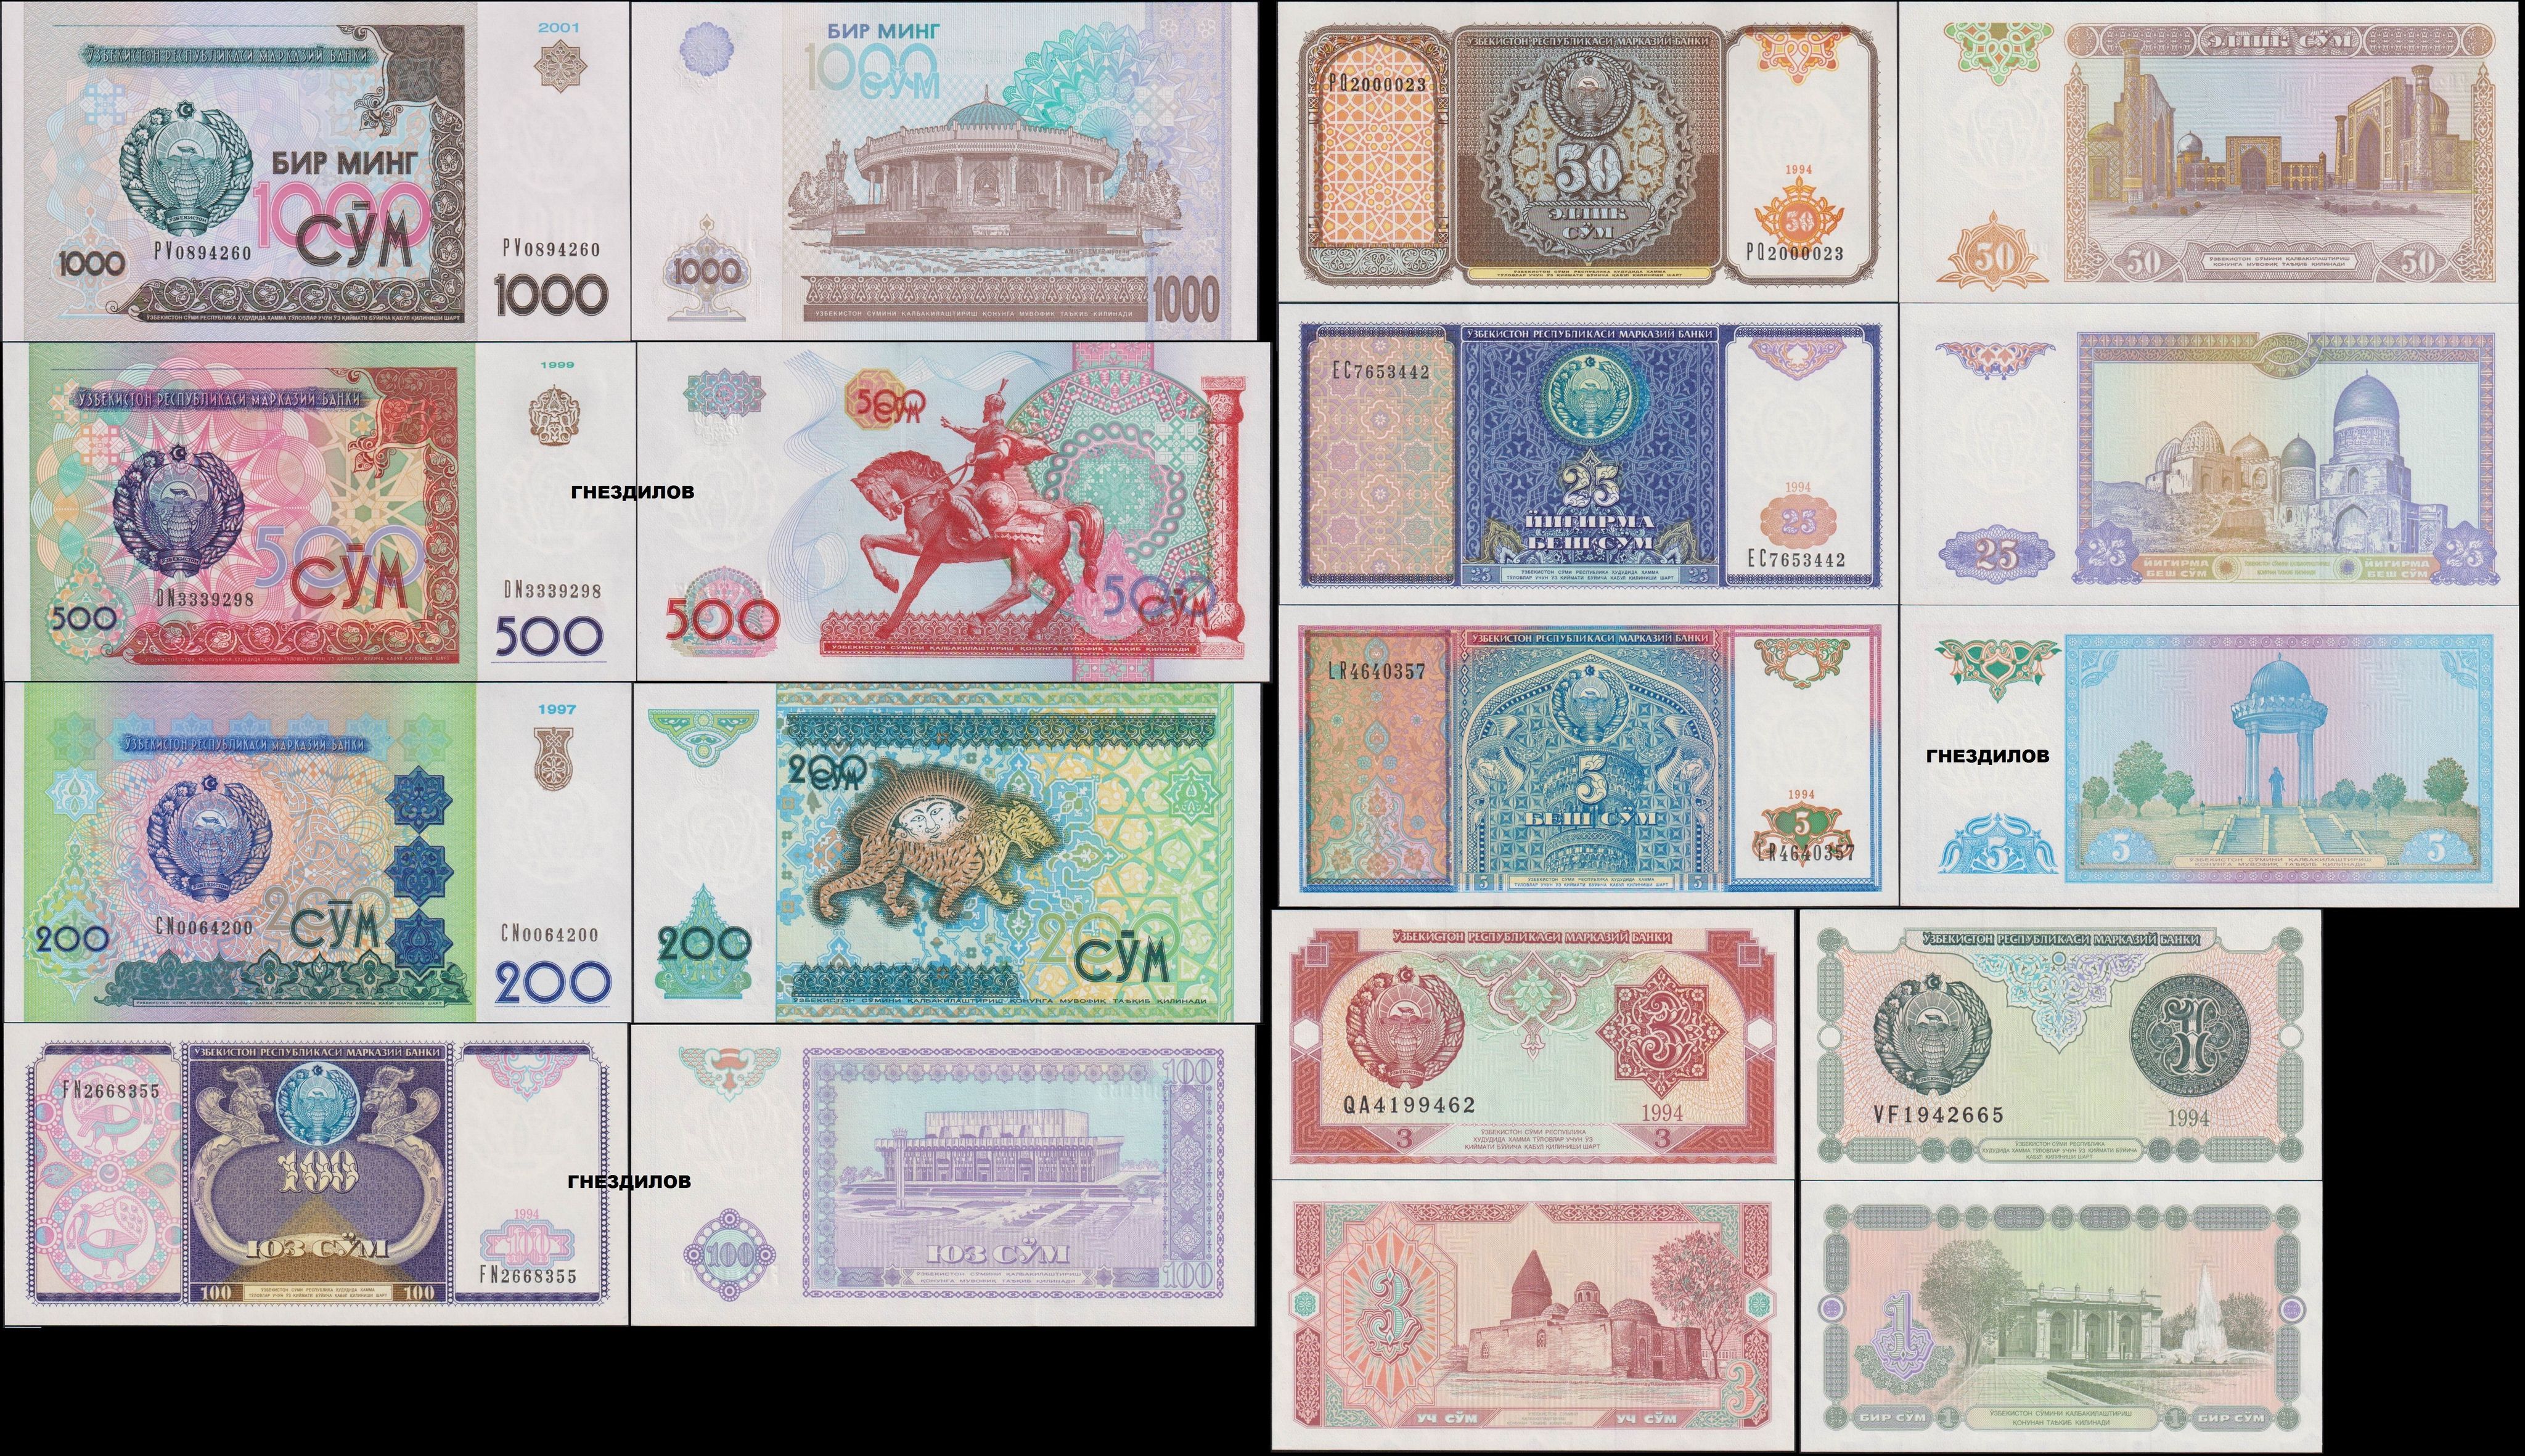 Дирхам сум. 100 Сум 1994 Узбекистан. 5 Сум 1994 Узбекистан. Банкноты Узбекистана. Узбекистан набор банкнот.